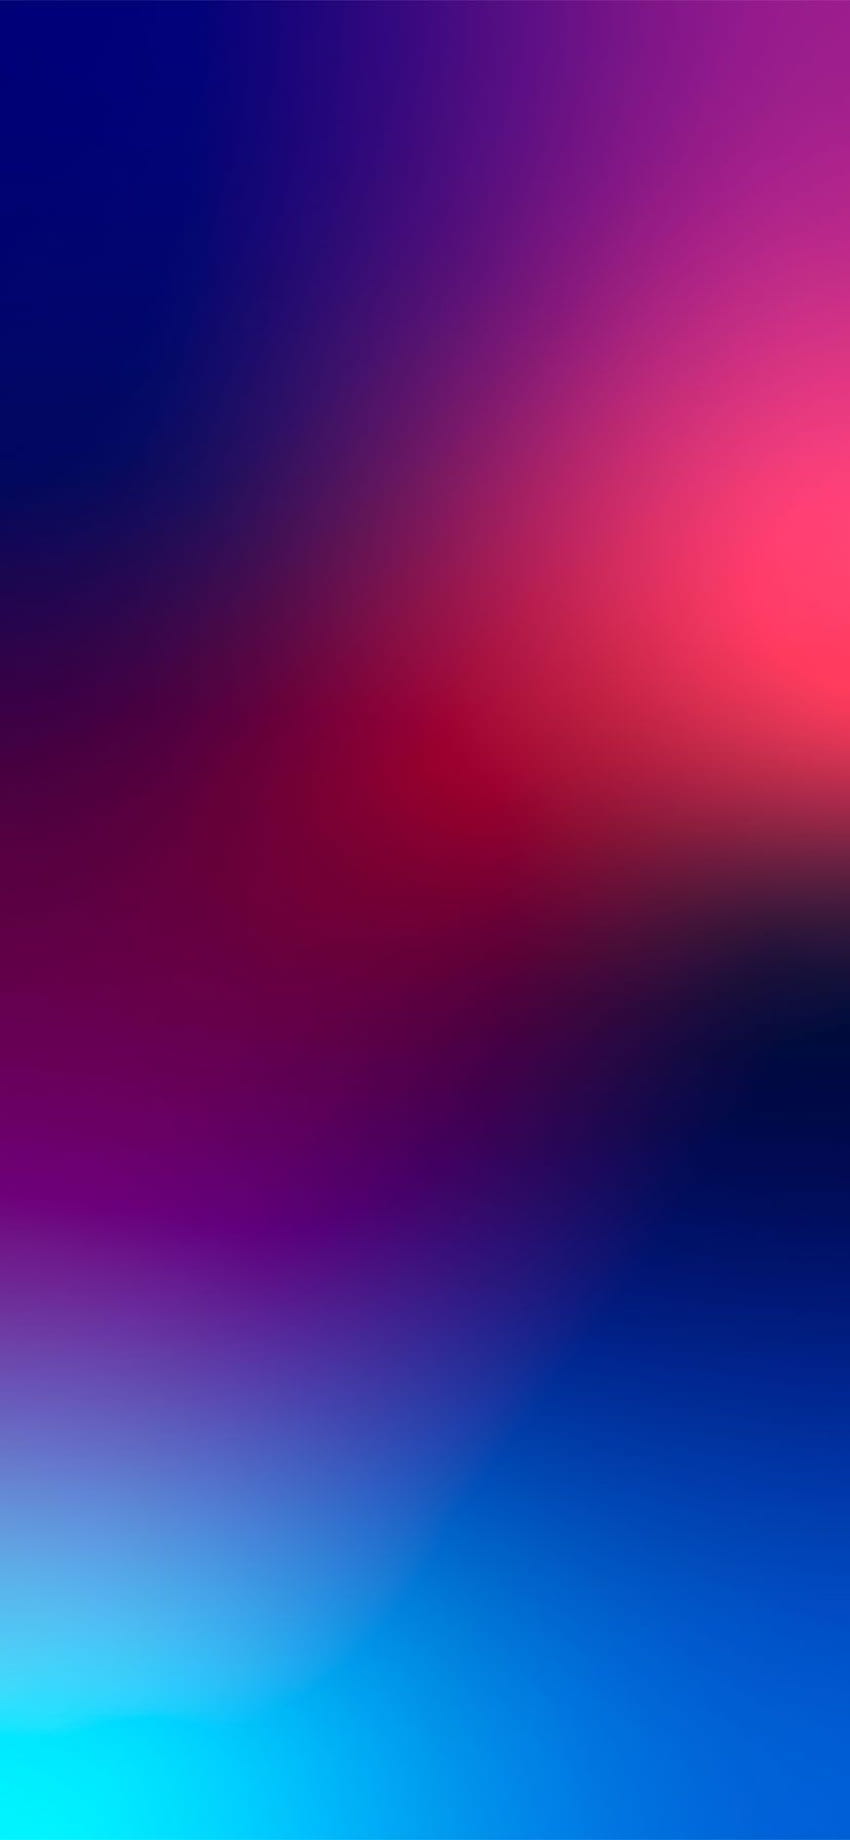 1080x1920  1080x1920 dark gradient artist artwork digital art hd  blur simple background for Iphone 6 7 8 wallpaper  Coolwallpapersme